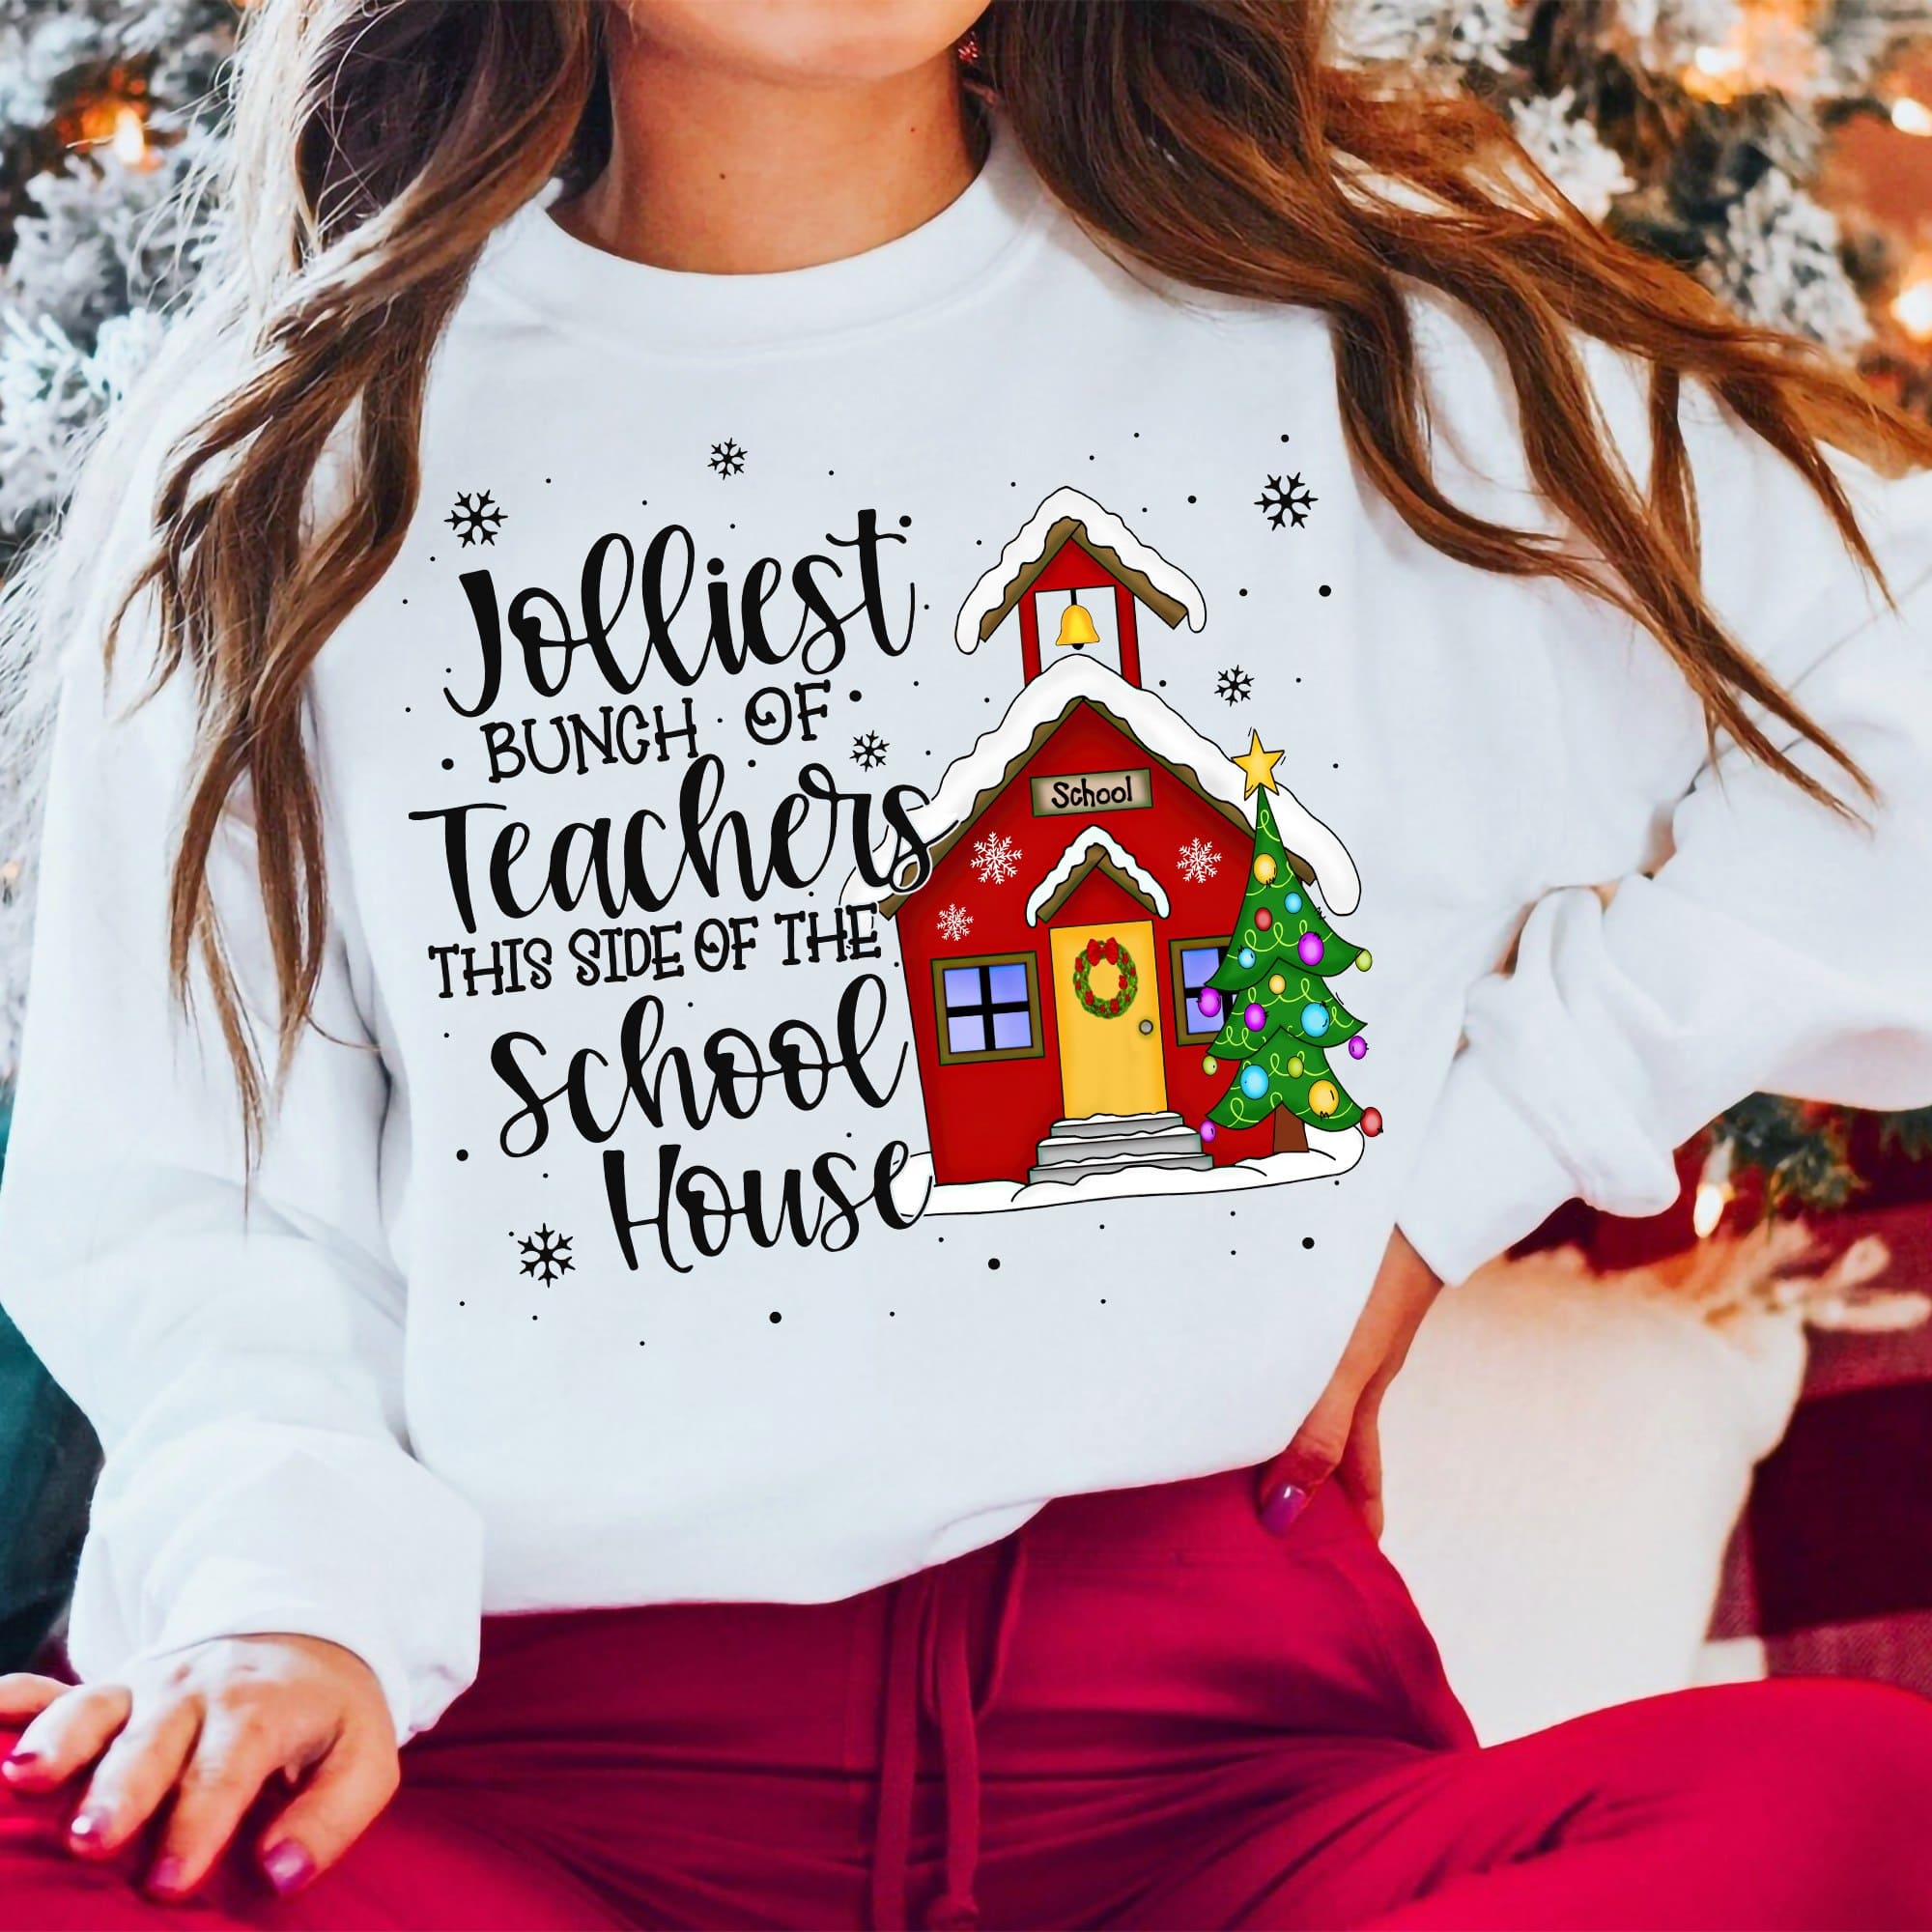 Jolliest bunch of teacher, this side of the school house - Christmas gift for teacher